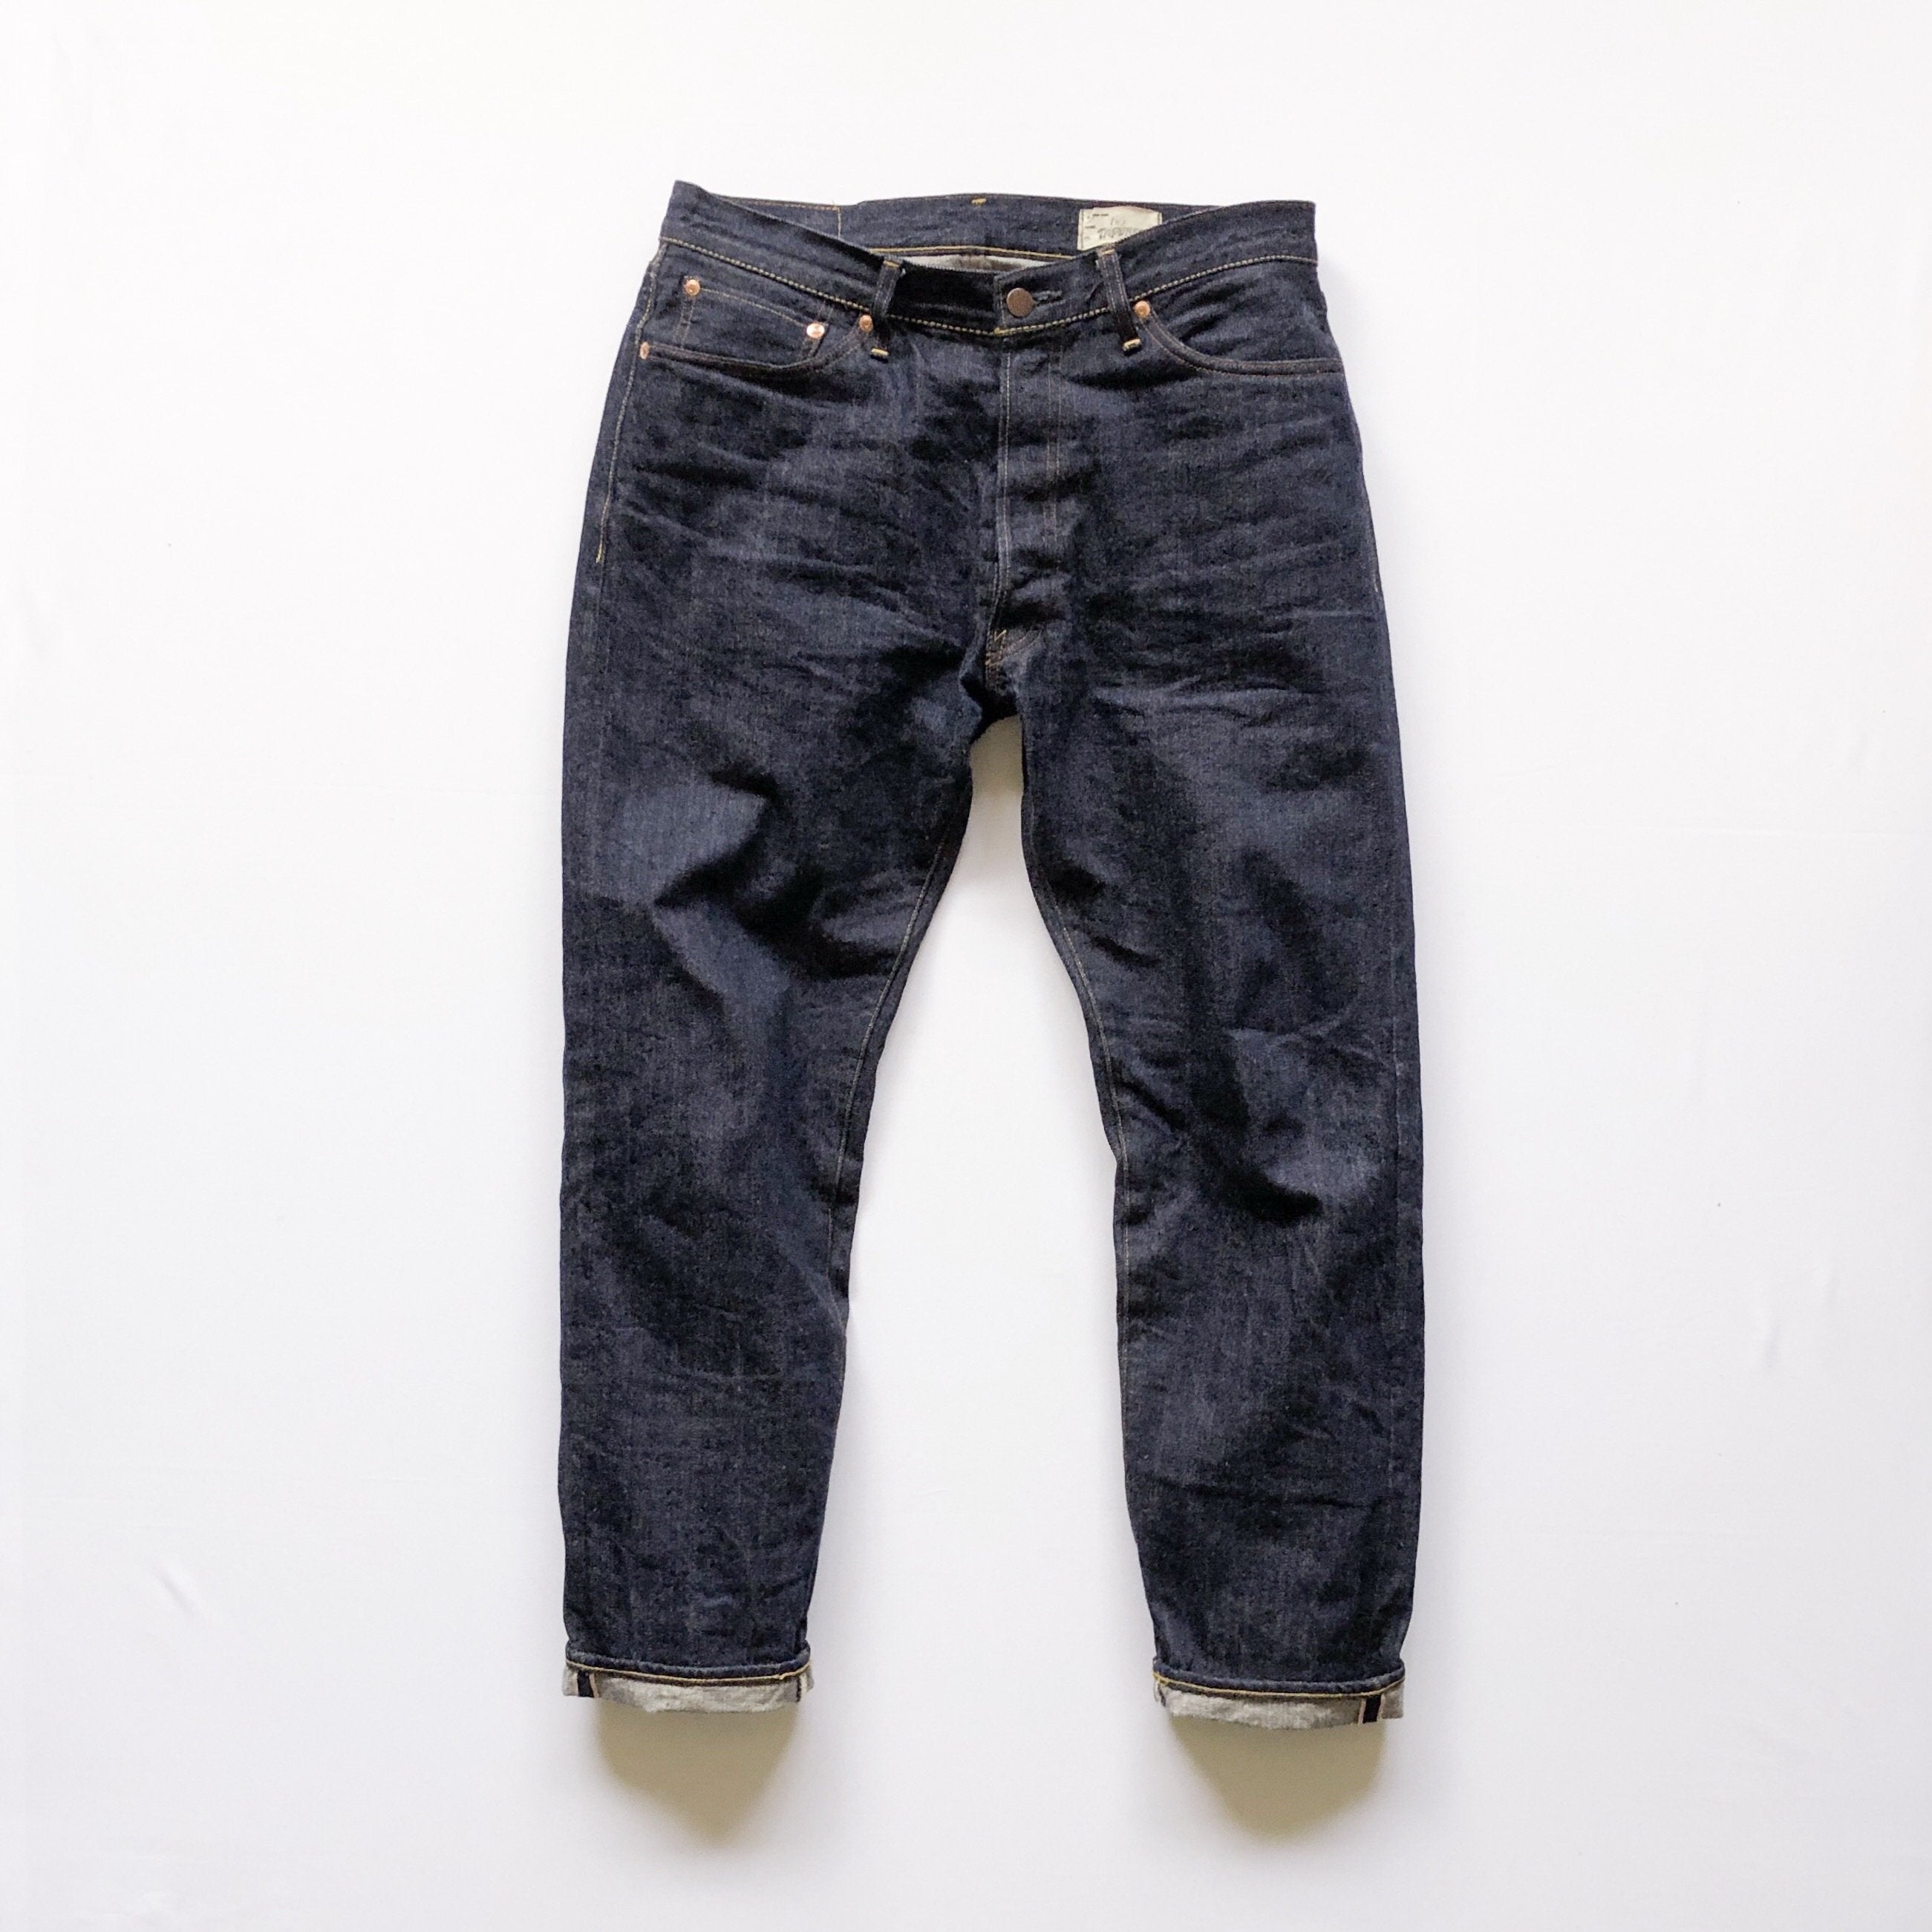 Big John “Ivy MJ” oz. Unsanforized Japanese Selvedge Jeans